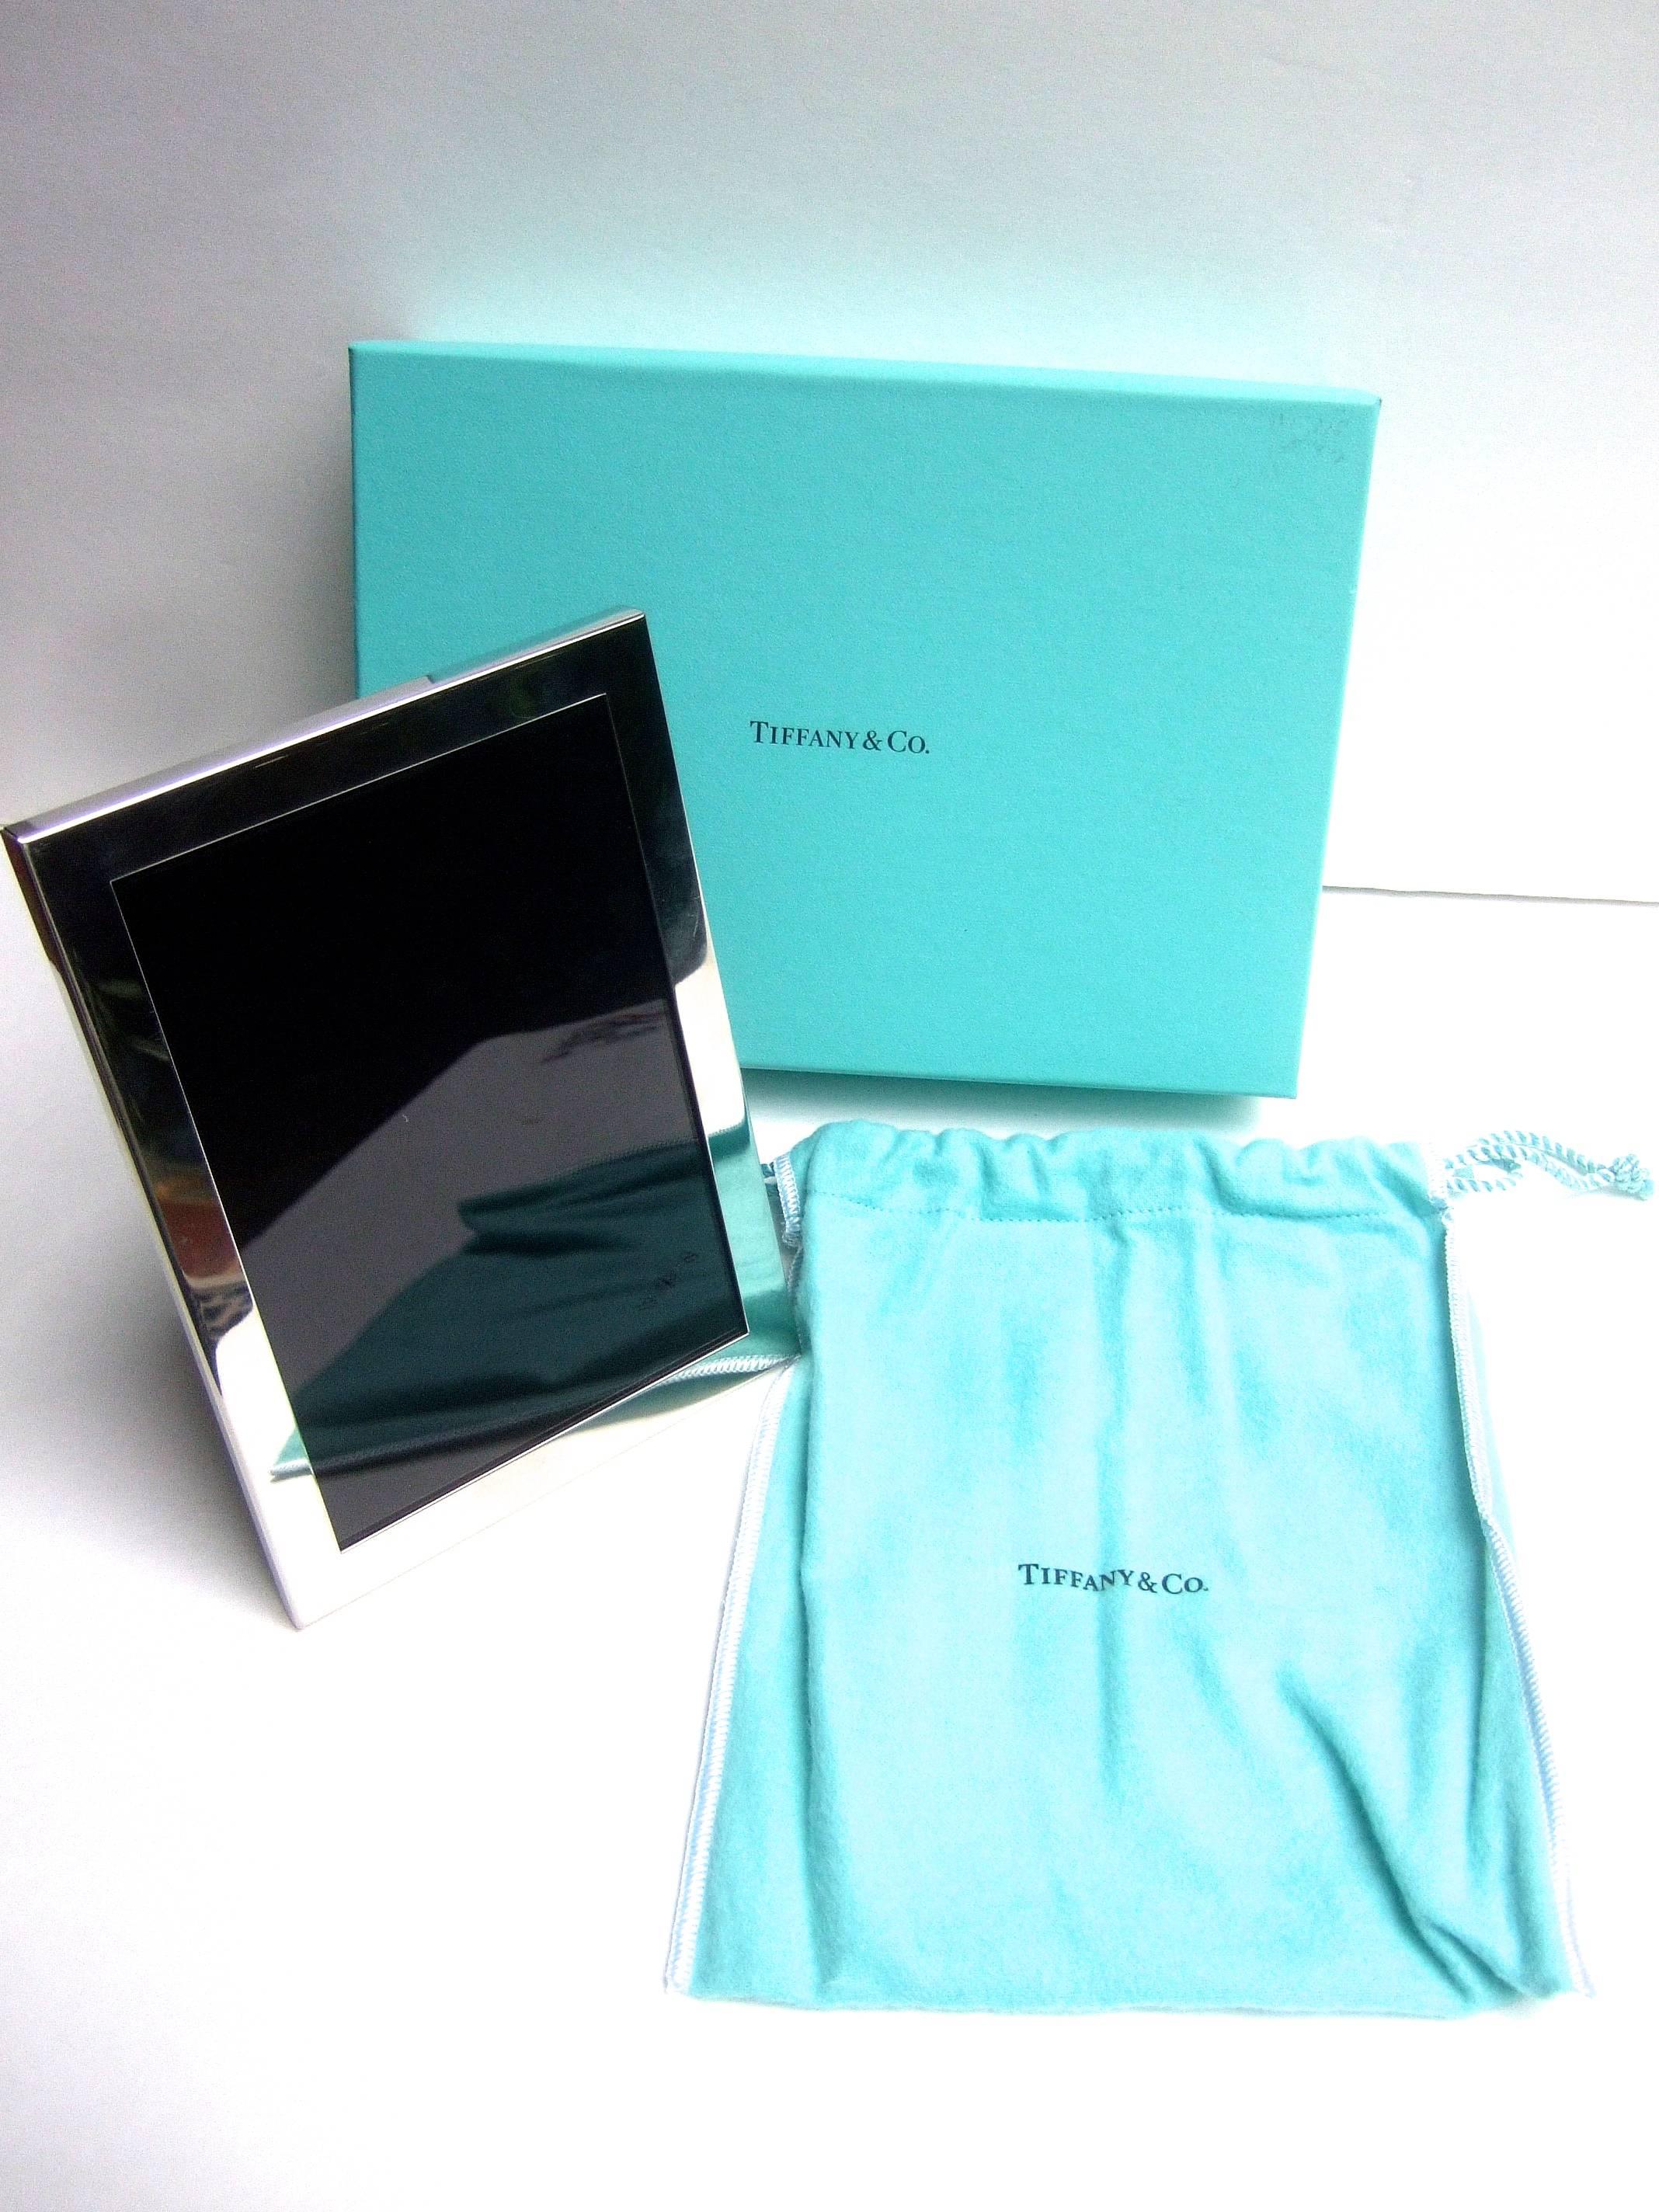 Tiffany & Co Sleek Chrome Photo Frame in Tiffany Box 4